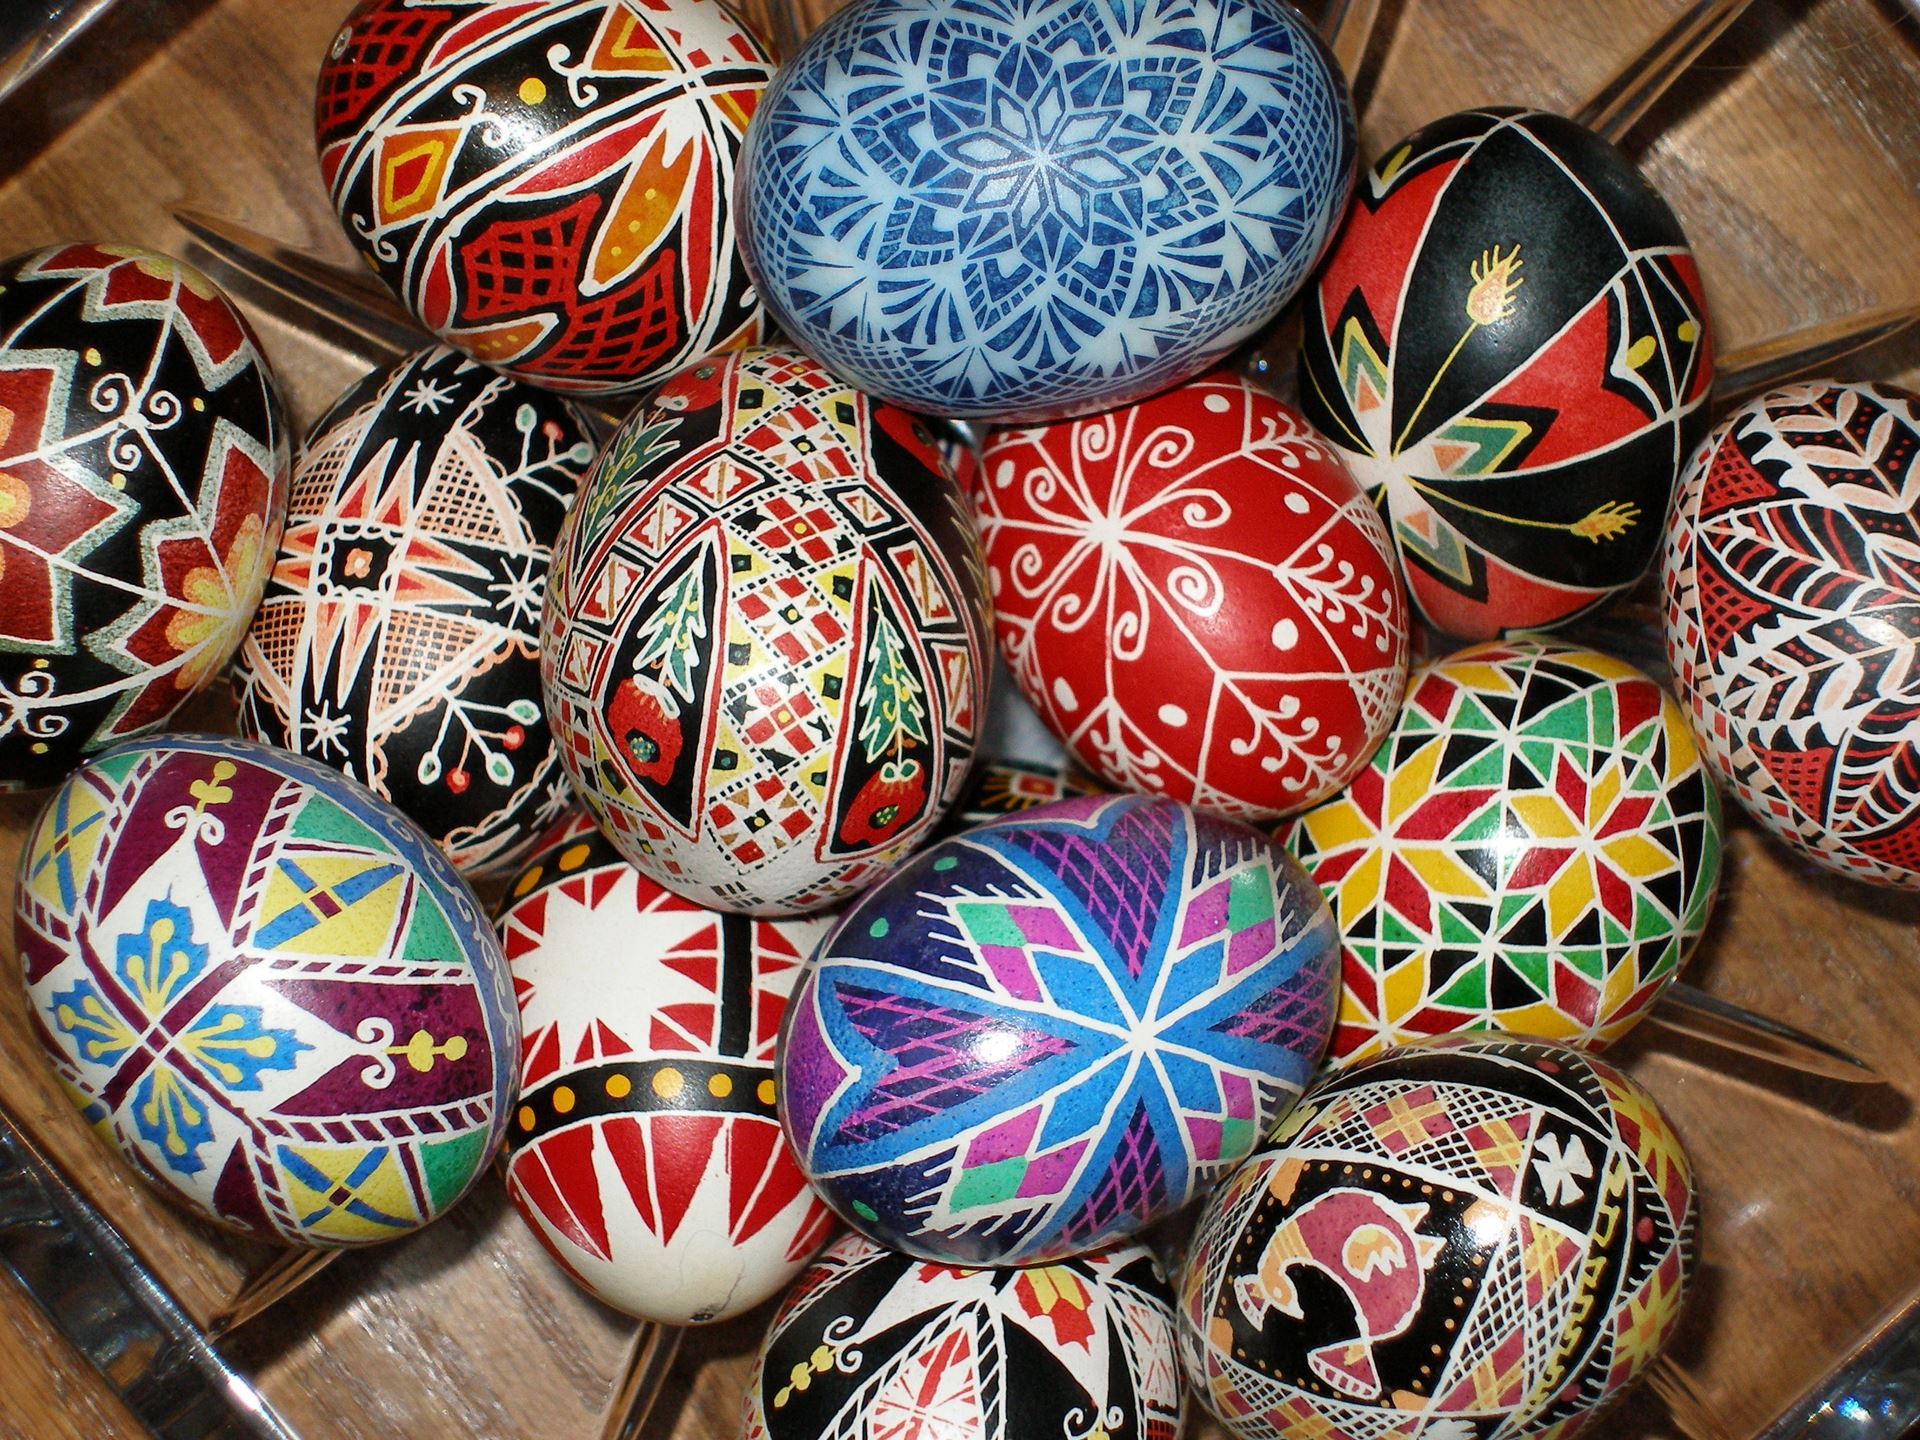 Germanic American Institute Pysanky European Egg Decorating